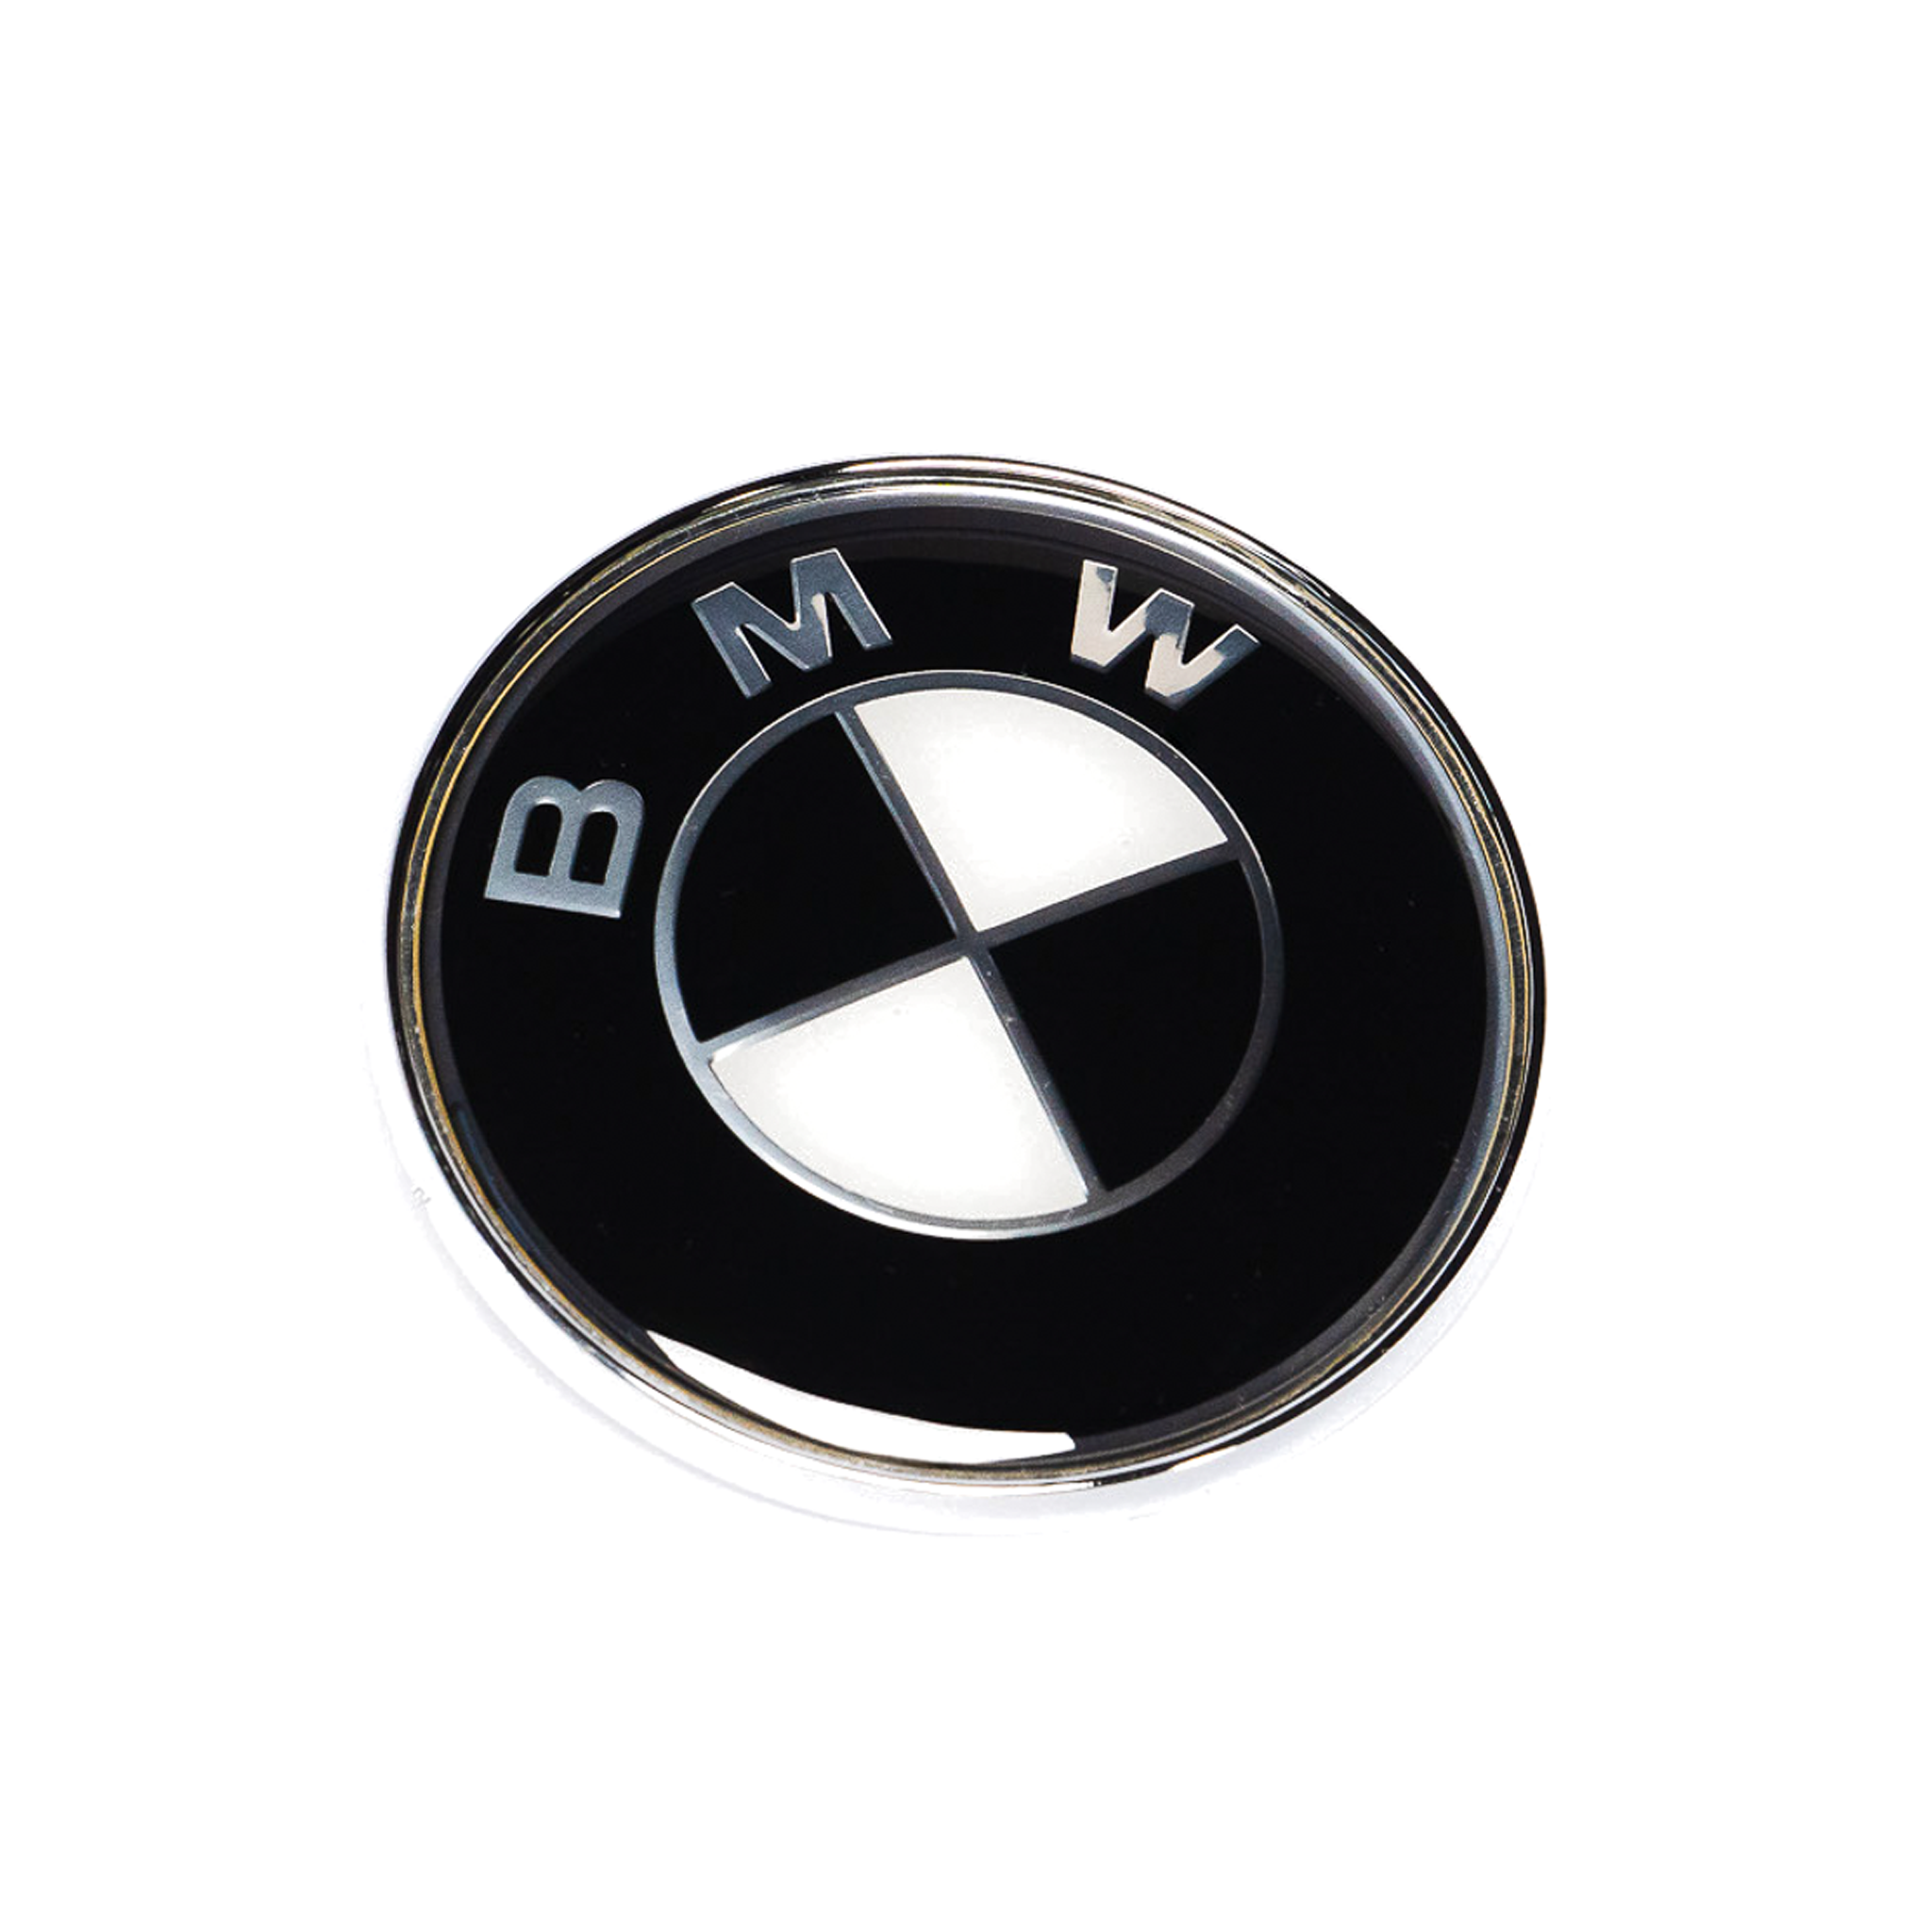 Exon BMW Style Stealth Black / White Trunk Badge Emblem 74mm for BMW 1 2 3 4 5 6 7 8-Series 1M M2 M3 M4 M5 M6 M8